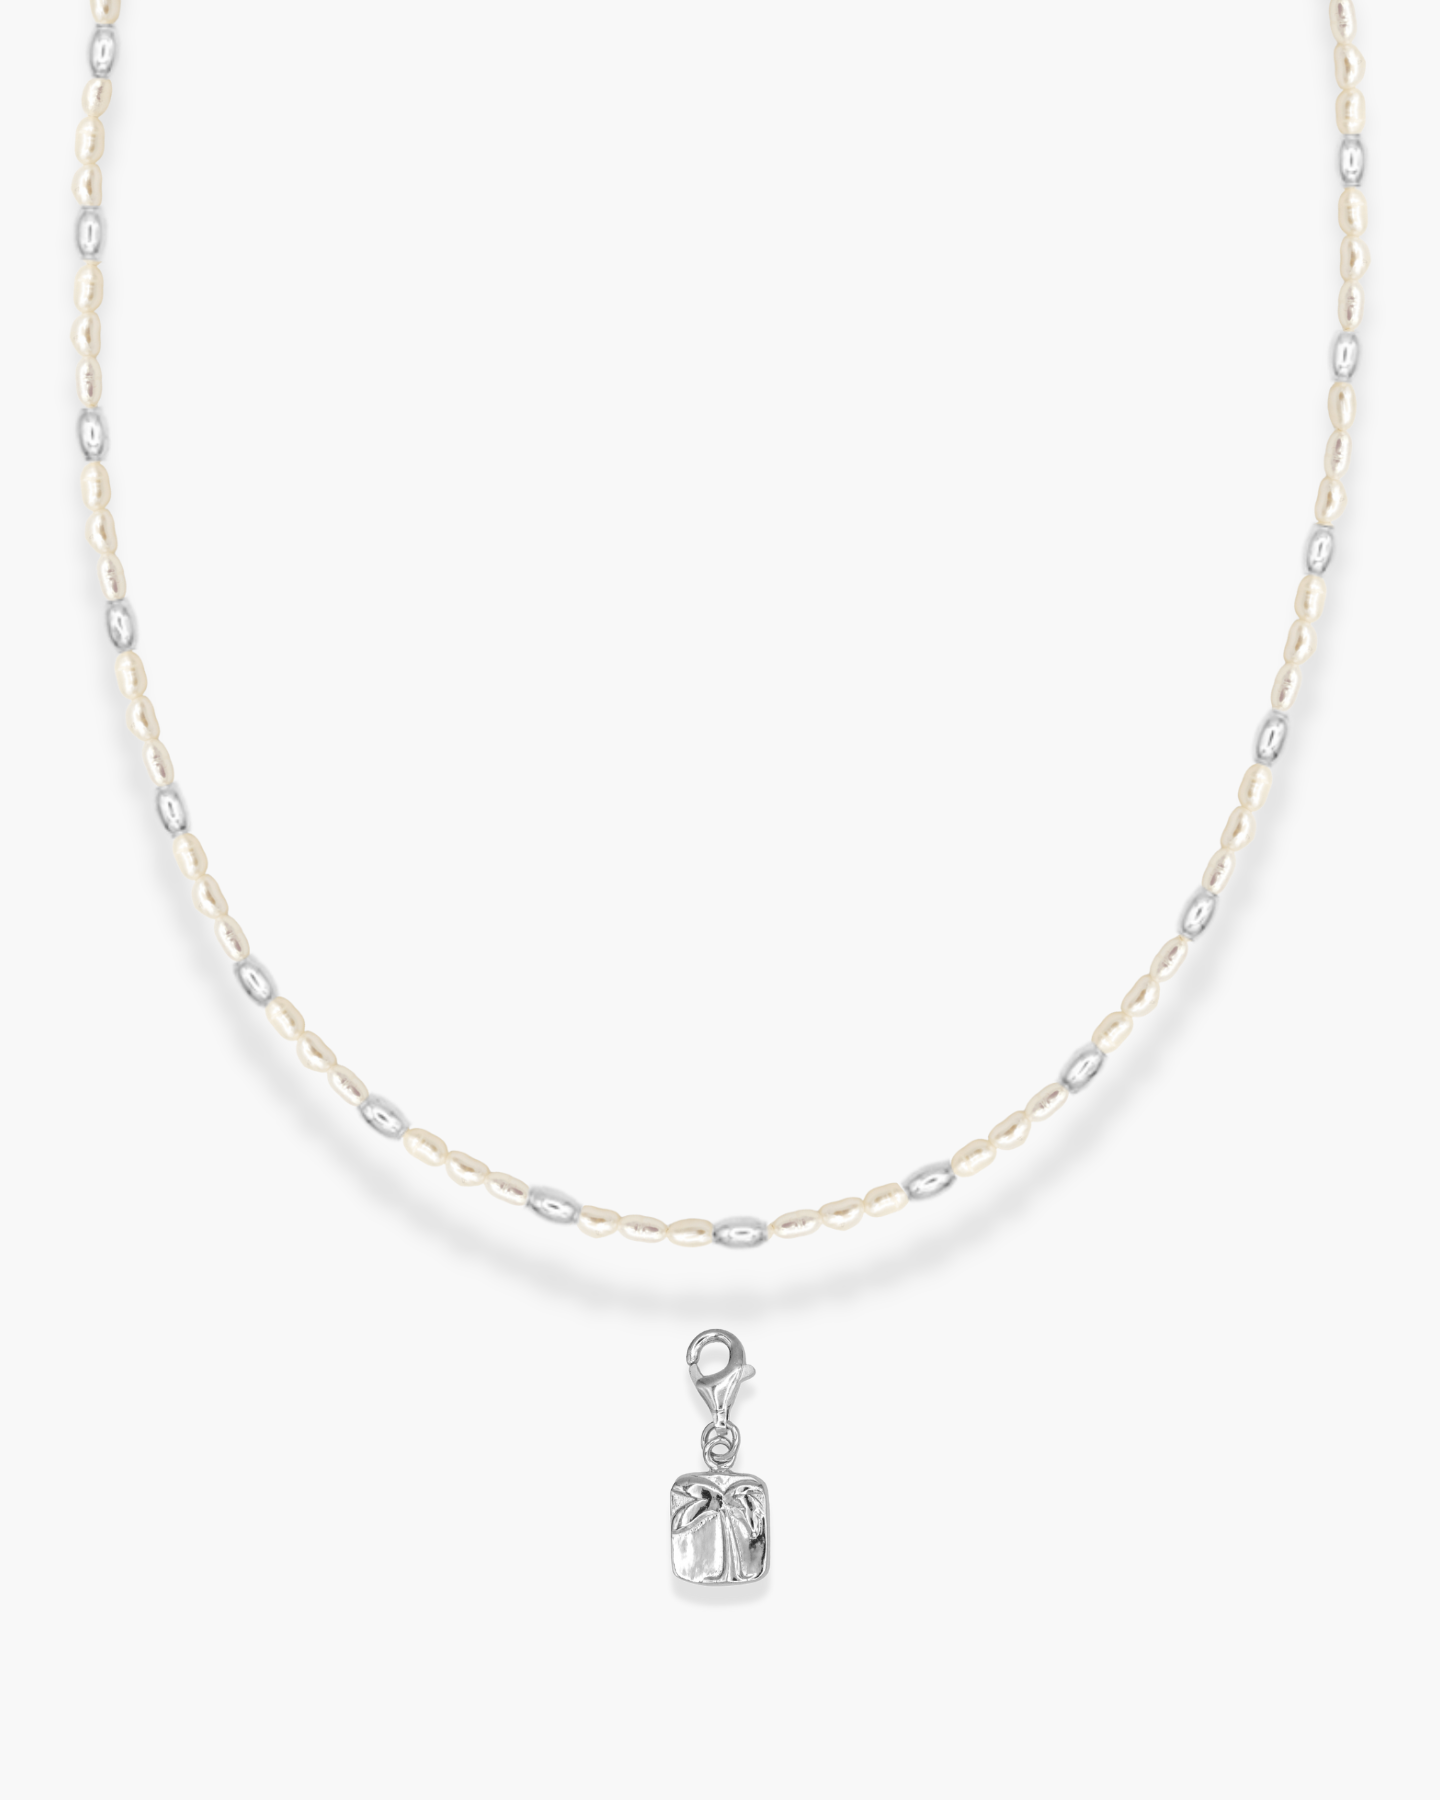 Florida Beach Necklace Charm Silver